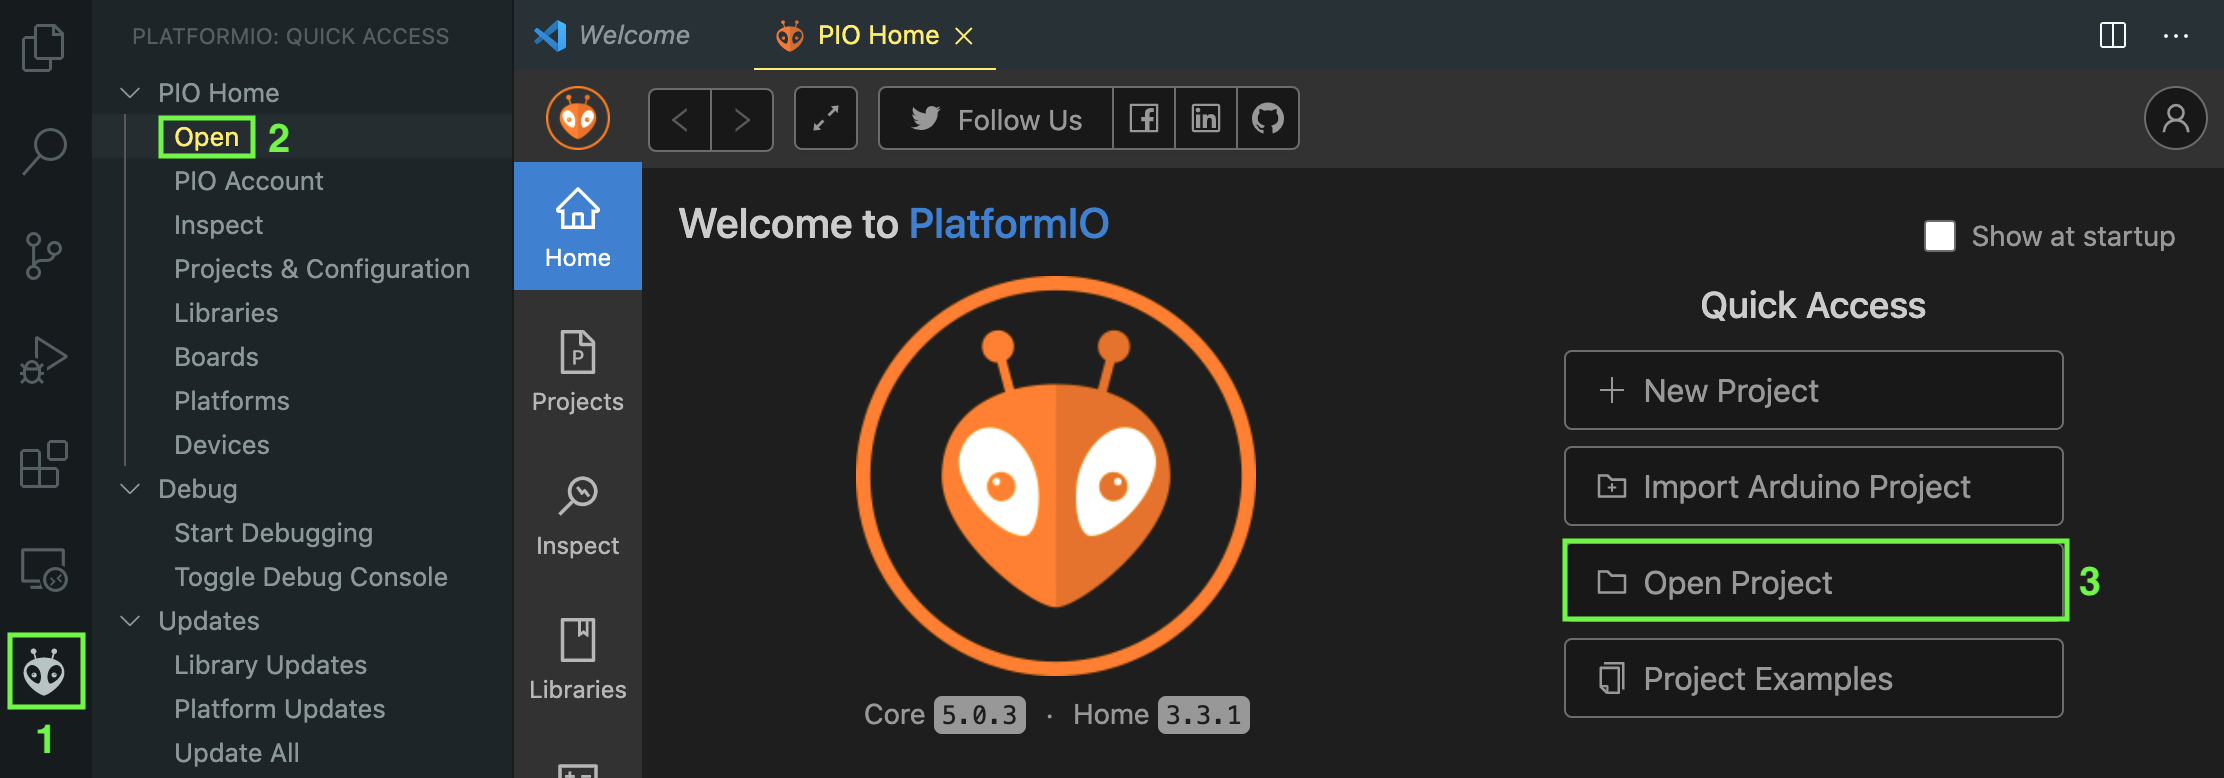 PlatformIO home screen